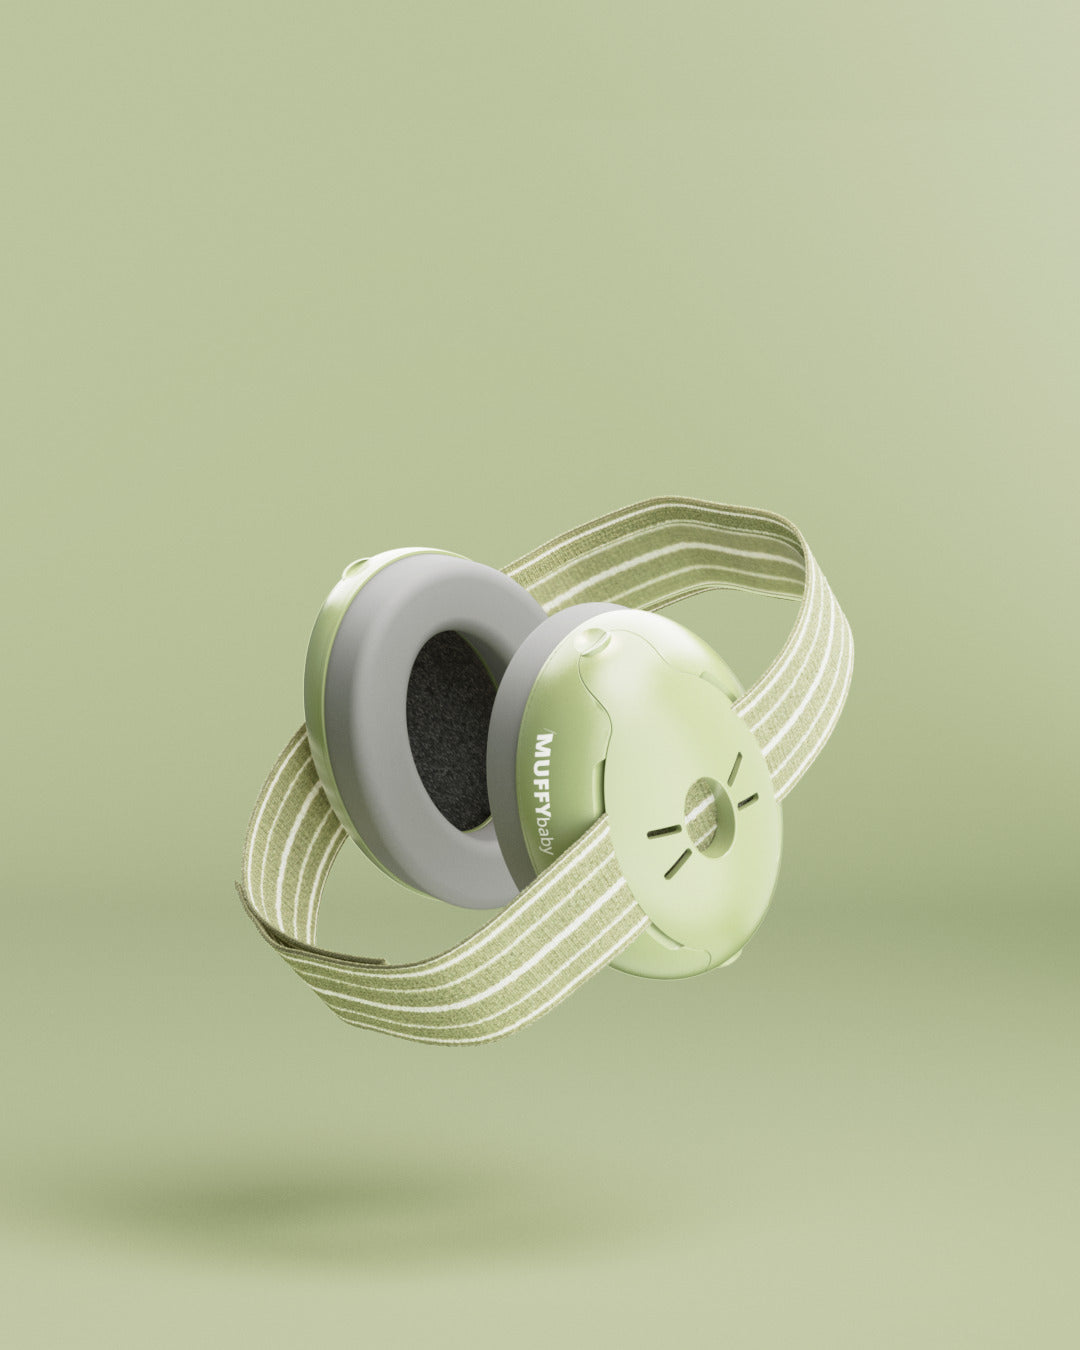 alpine muffy baby classic green earmuffs for babies